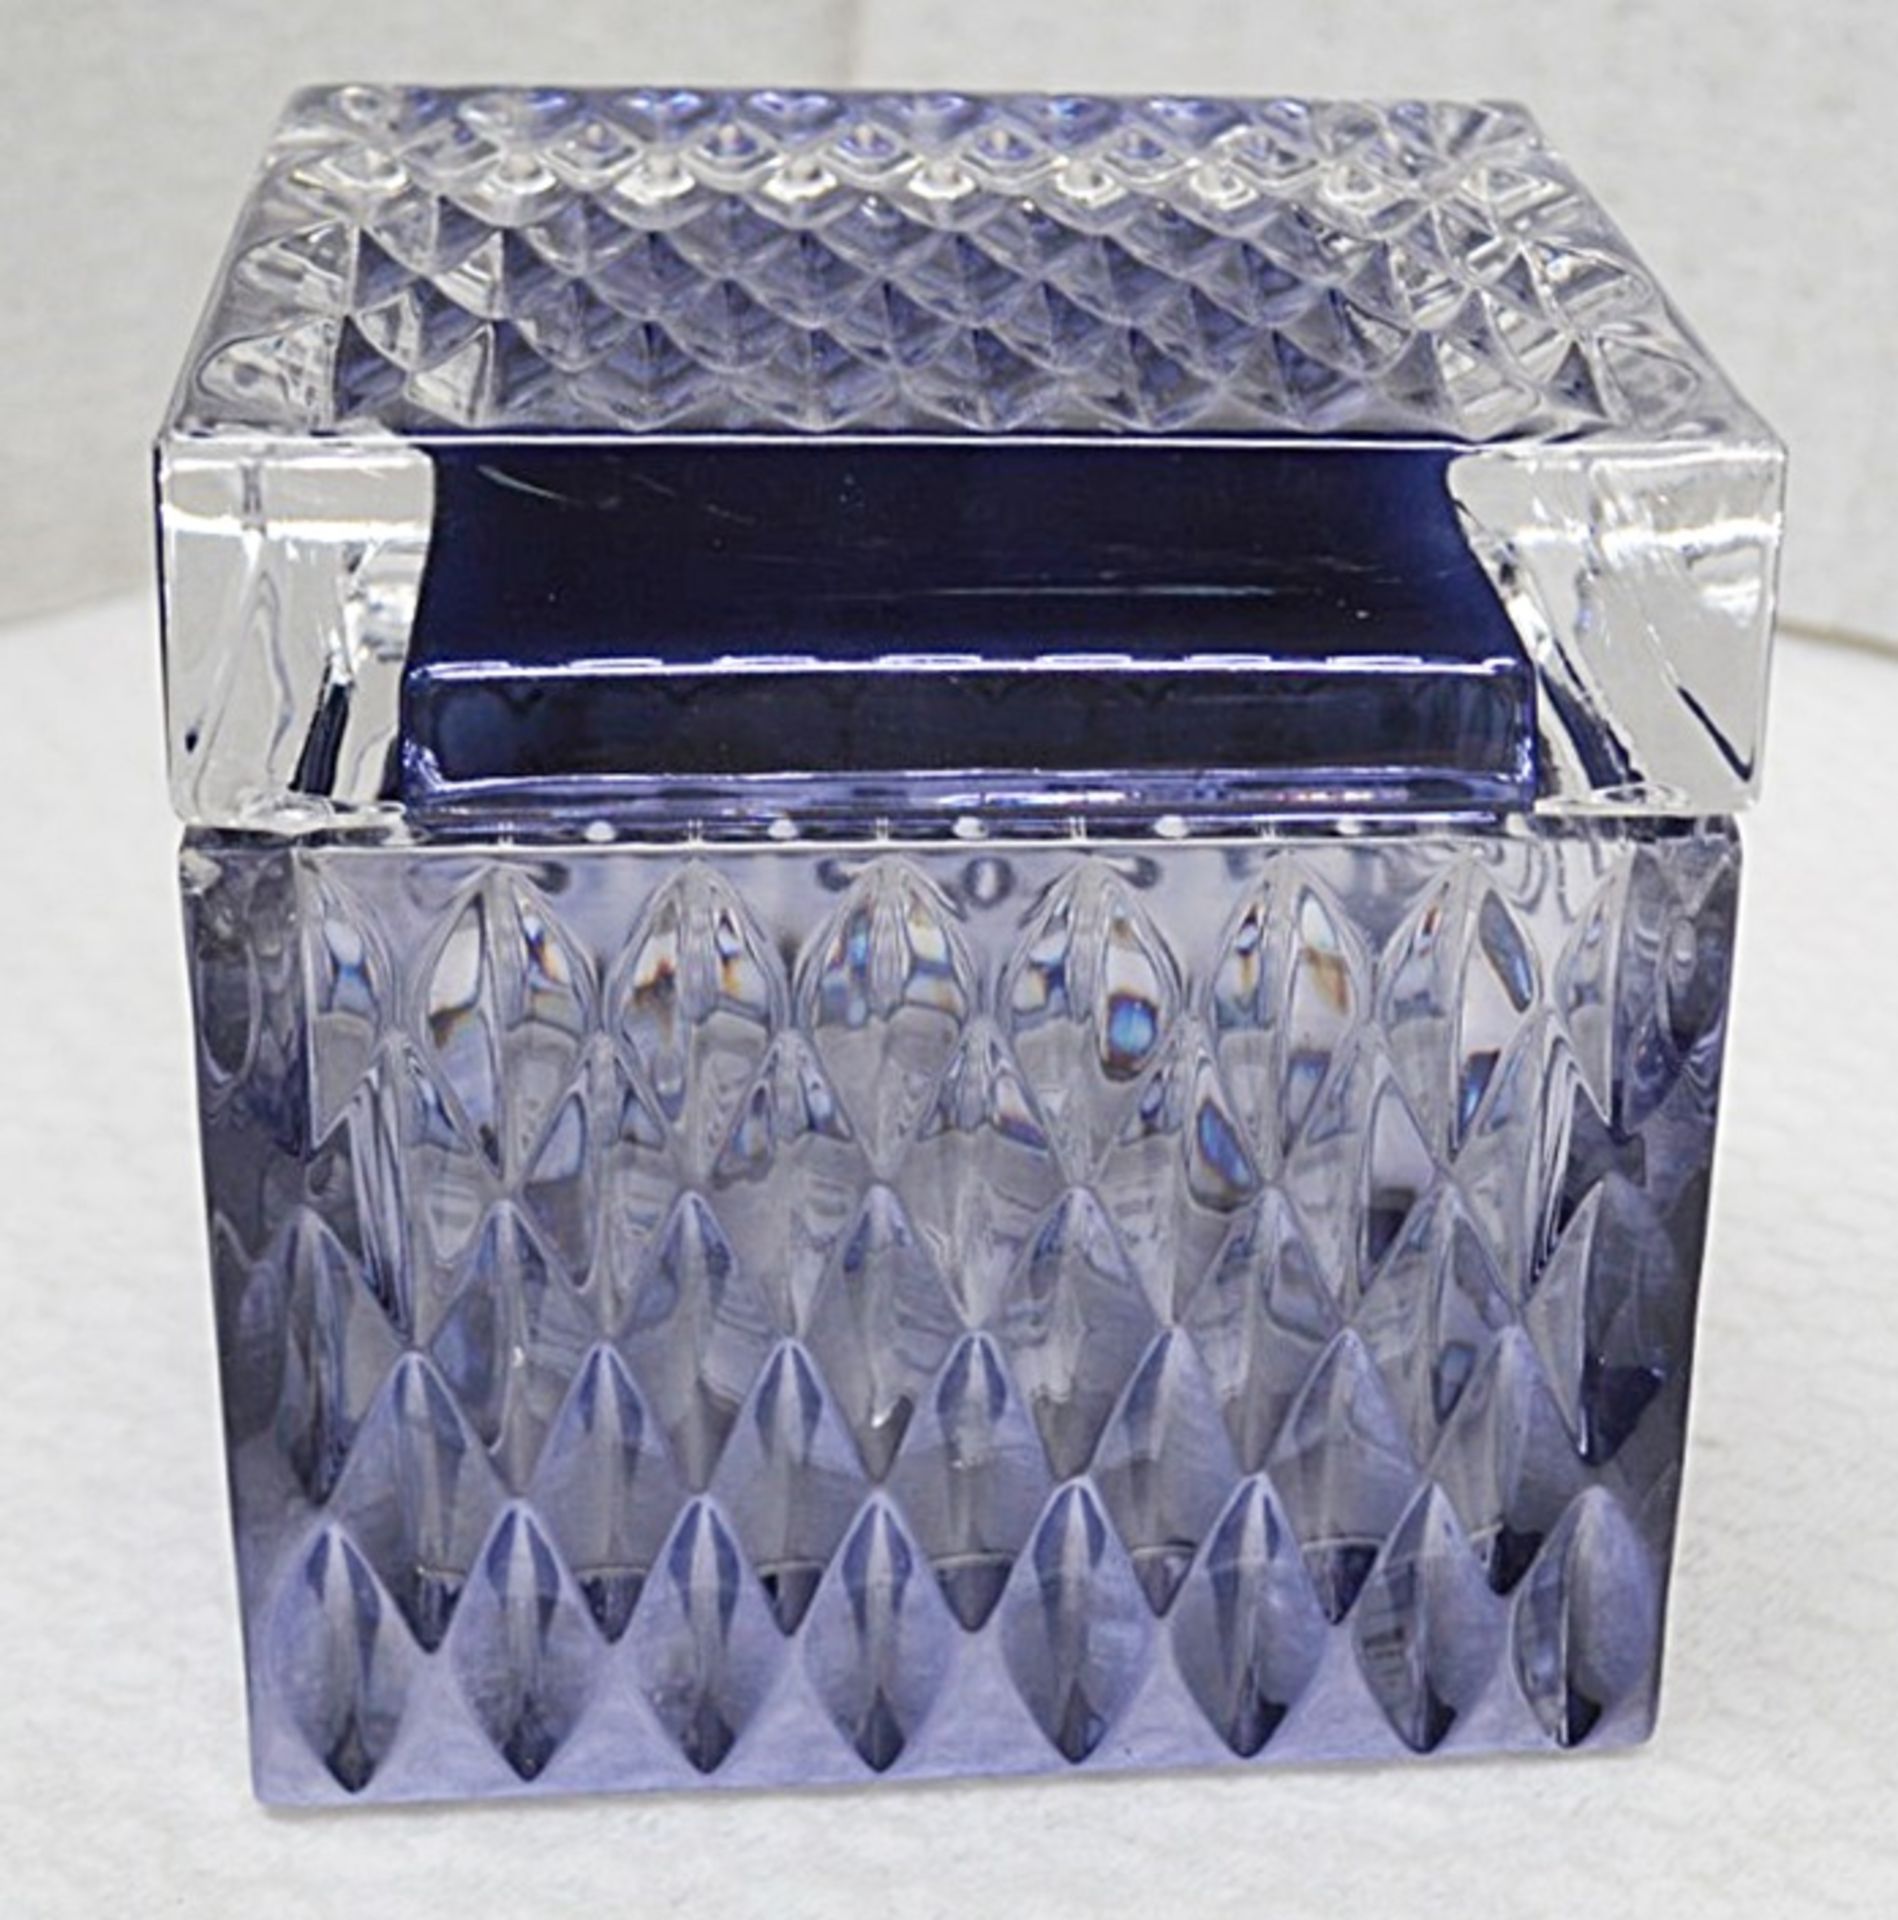 1 x BALDI 'Home Jewels' Italian Hand-crafted Artisan Perfume Box In Dark Blue Crystal - RRP £880.00 - Image 2 of 6